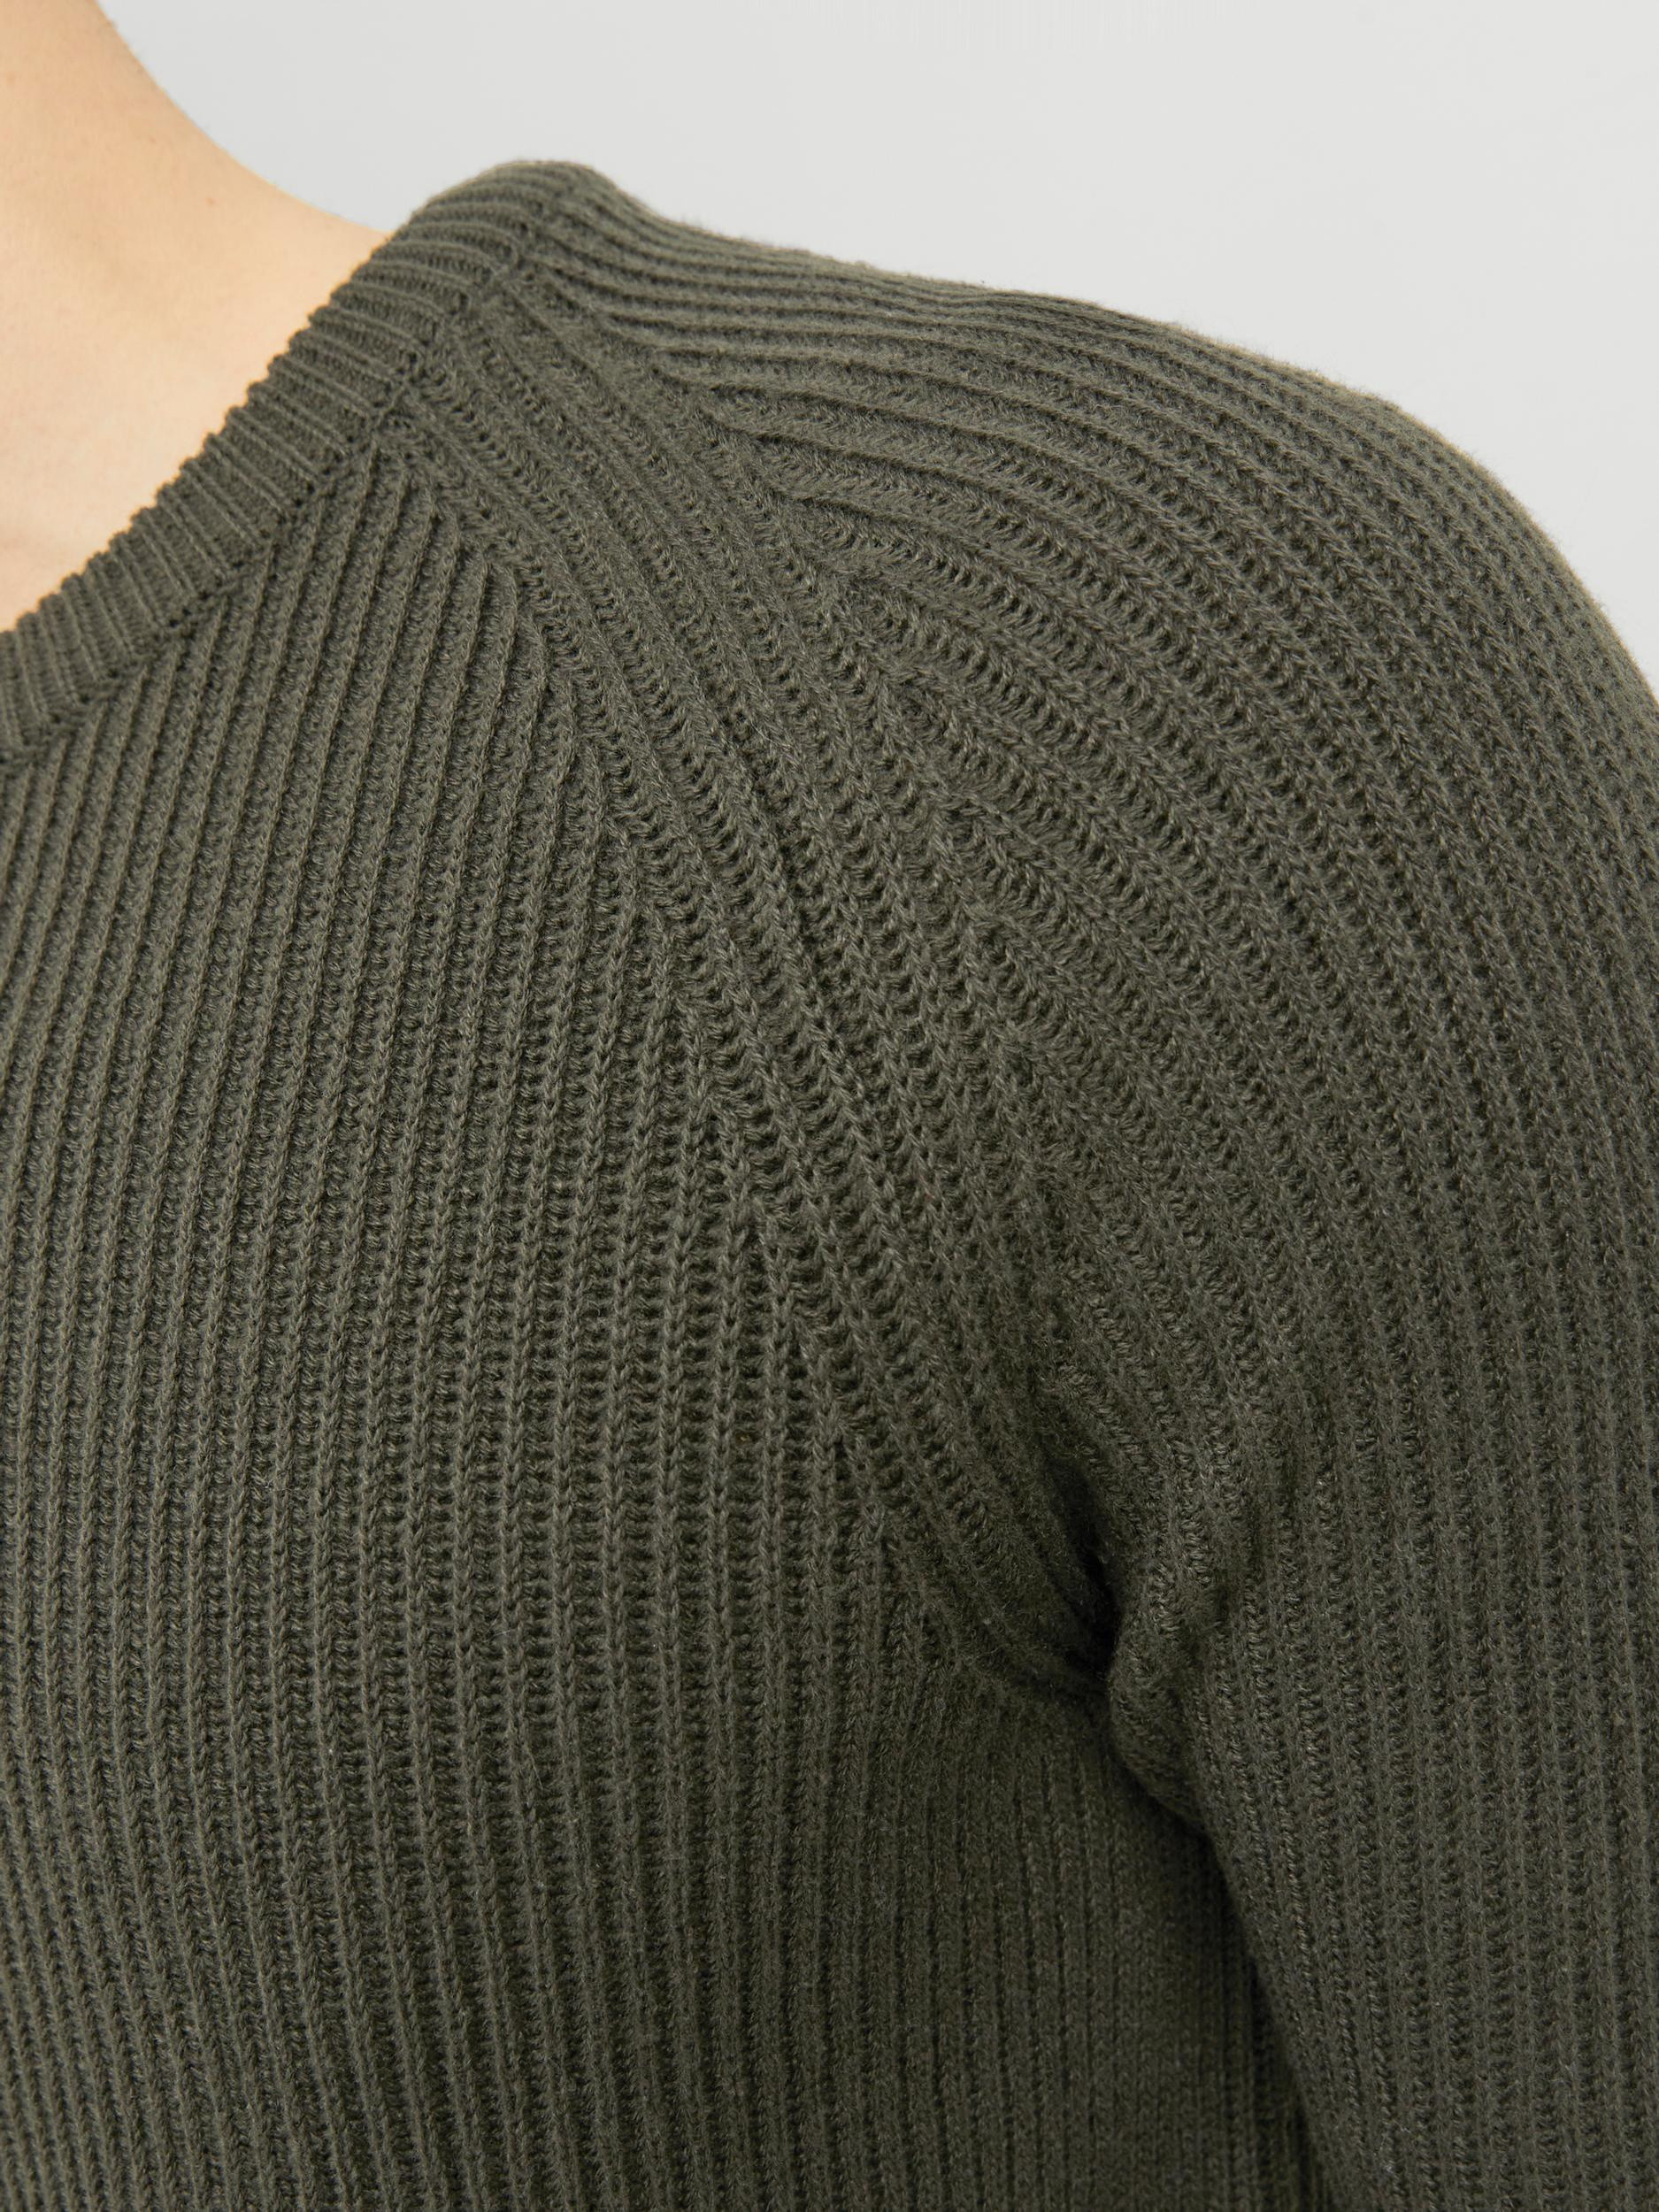 Jack & Jones Ribbed Knitted Sweater, Dark Green, large image number 5